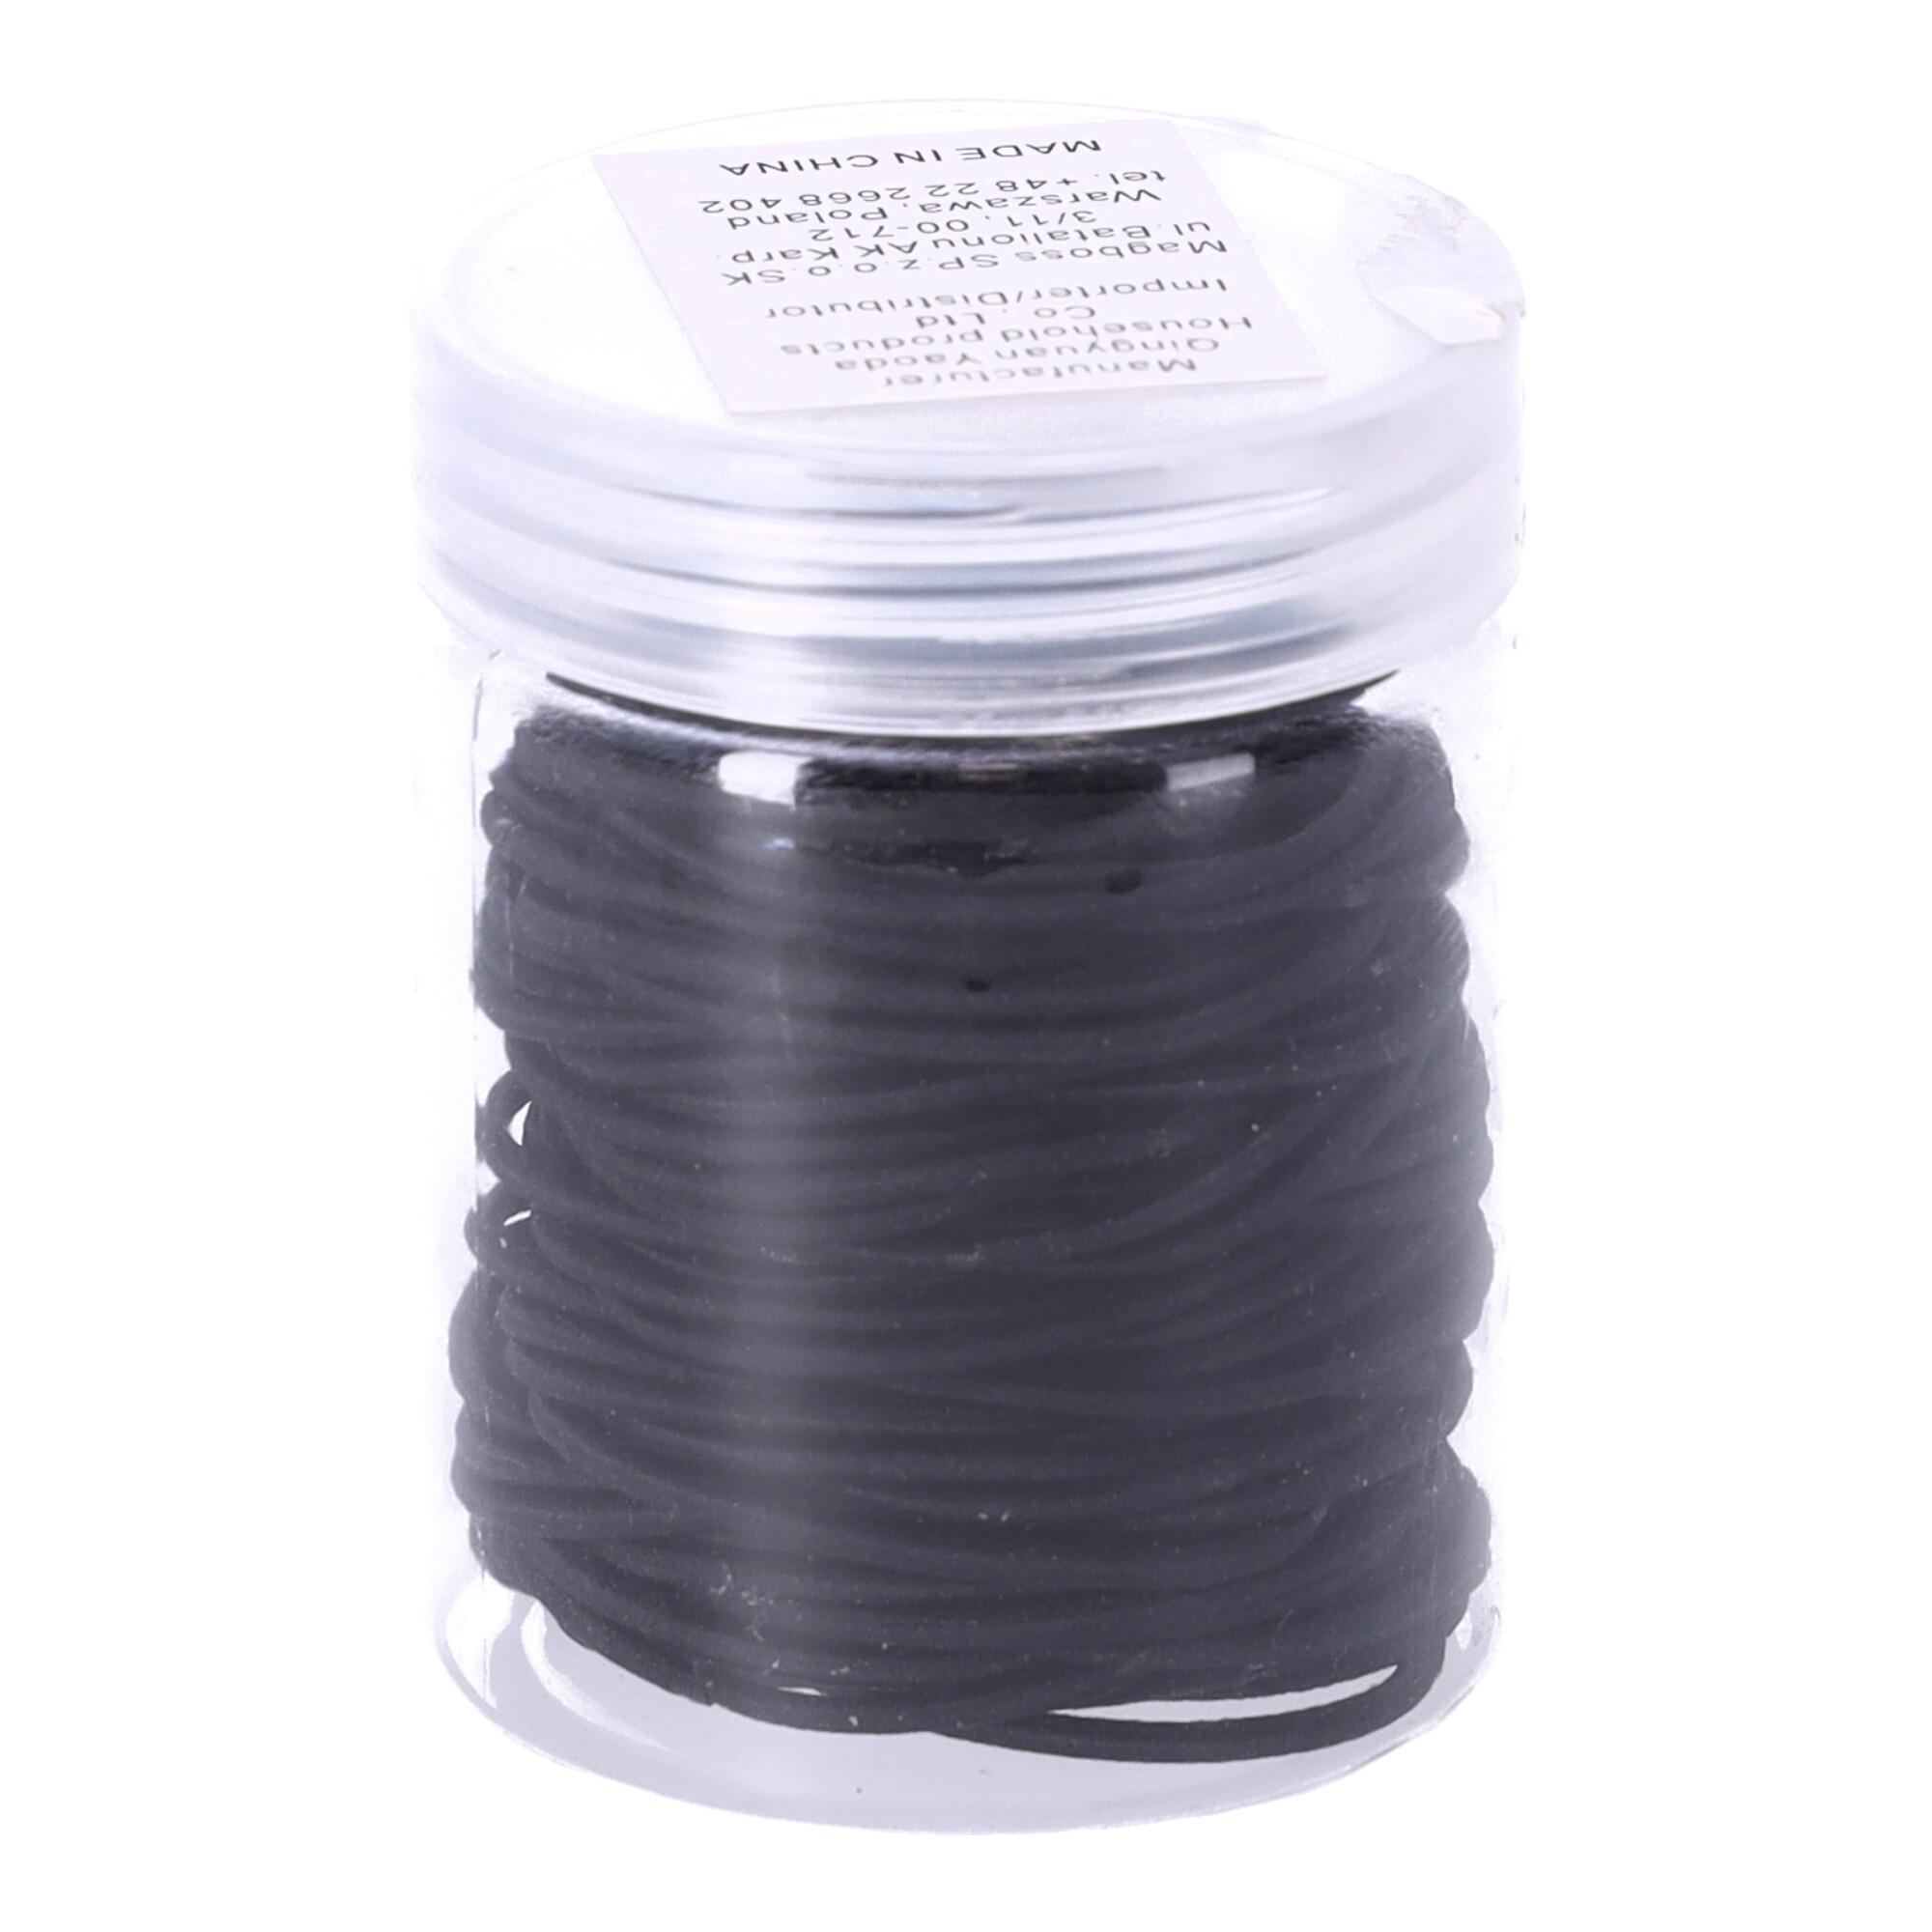 A set of hair elastics - black